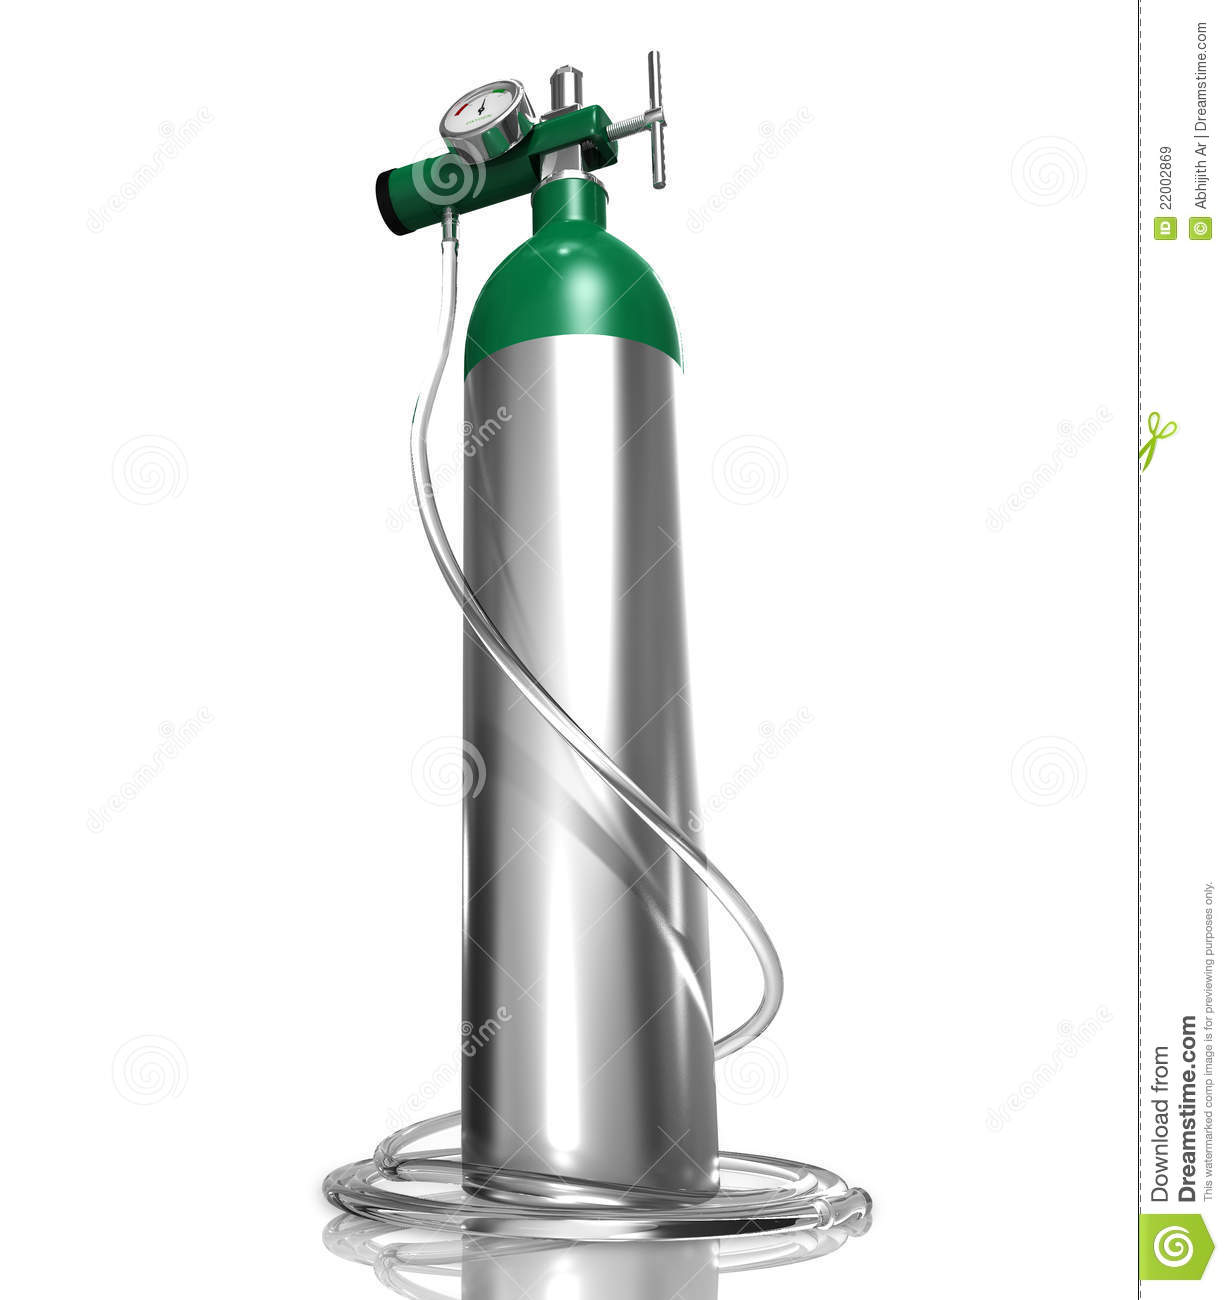 Oxygen Cylinder Royalty Free Stock Images   Image  22002869